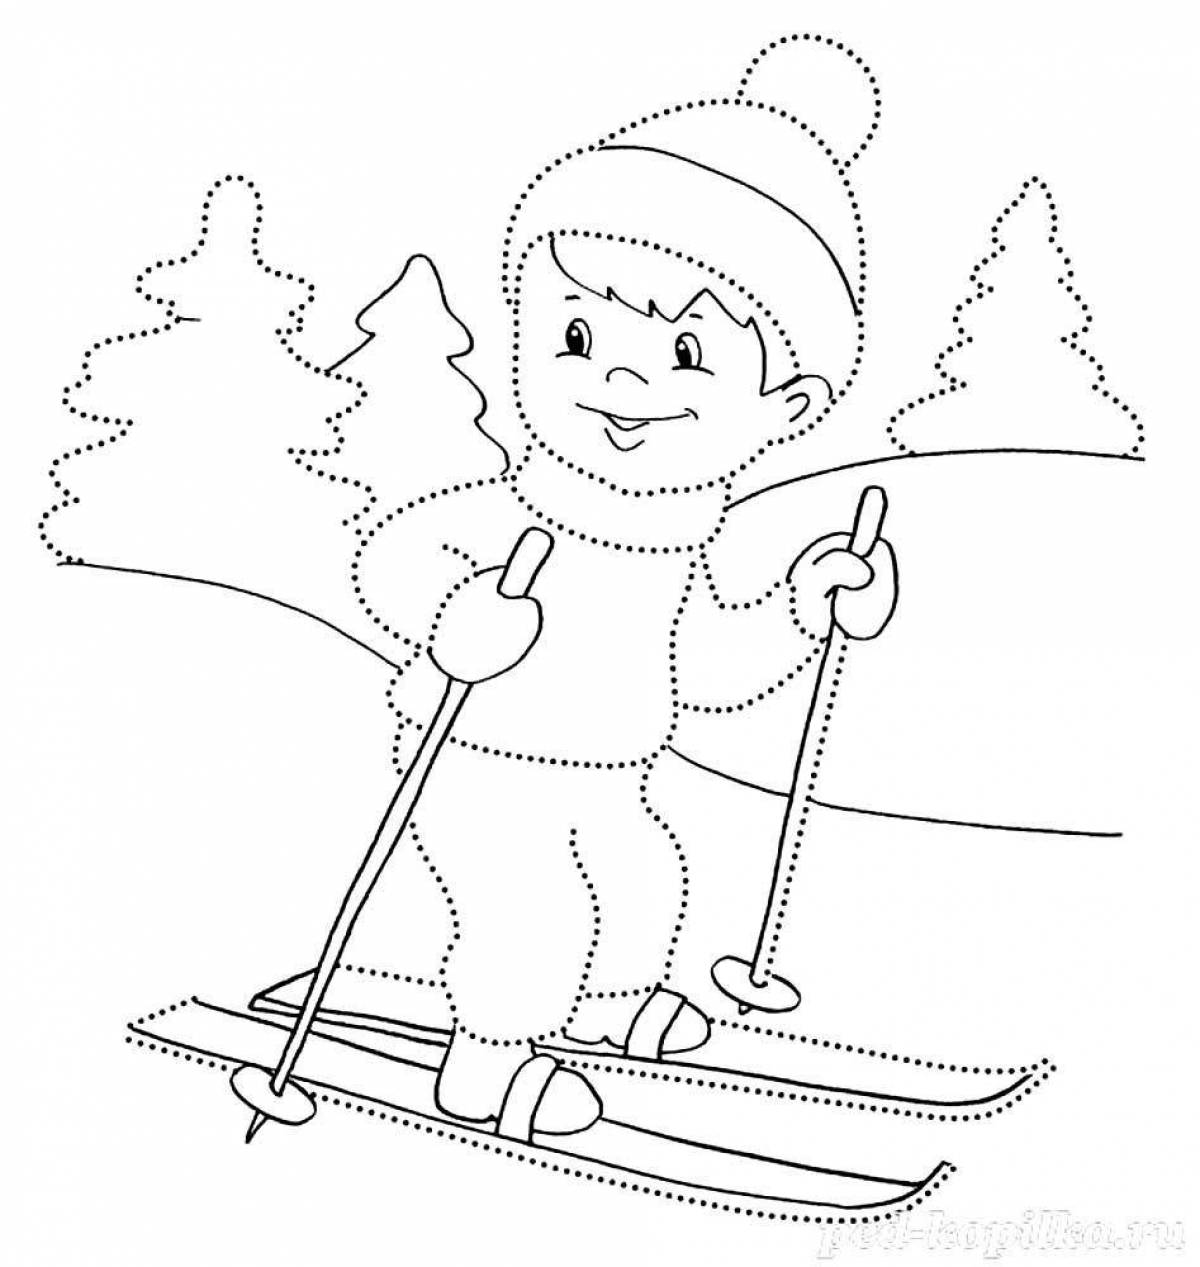 Luminous skis for kids